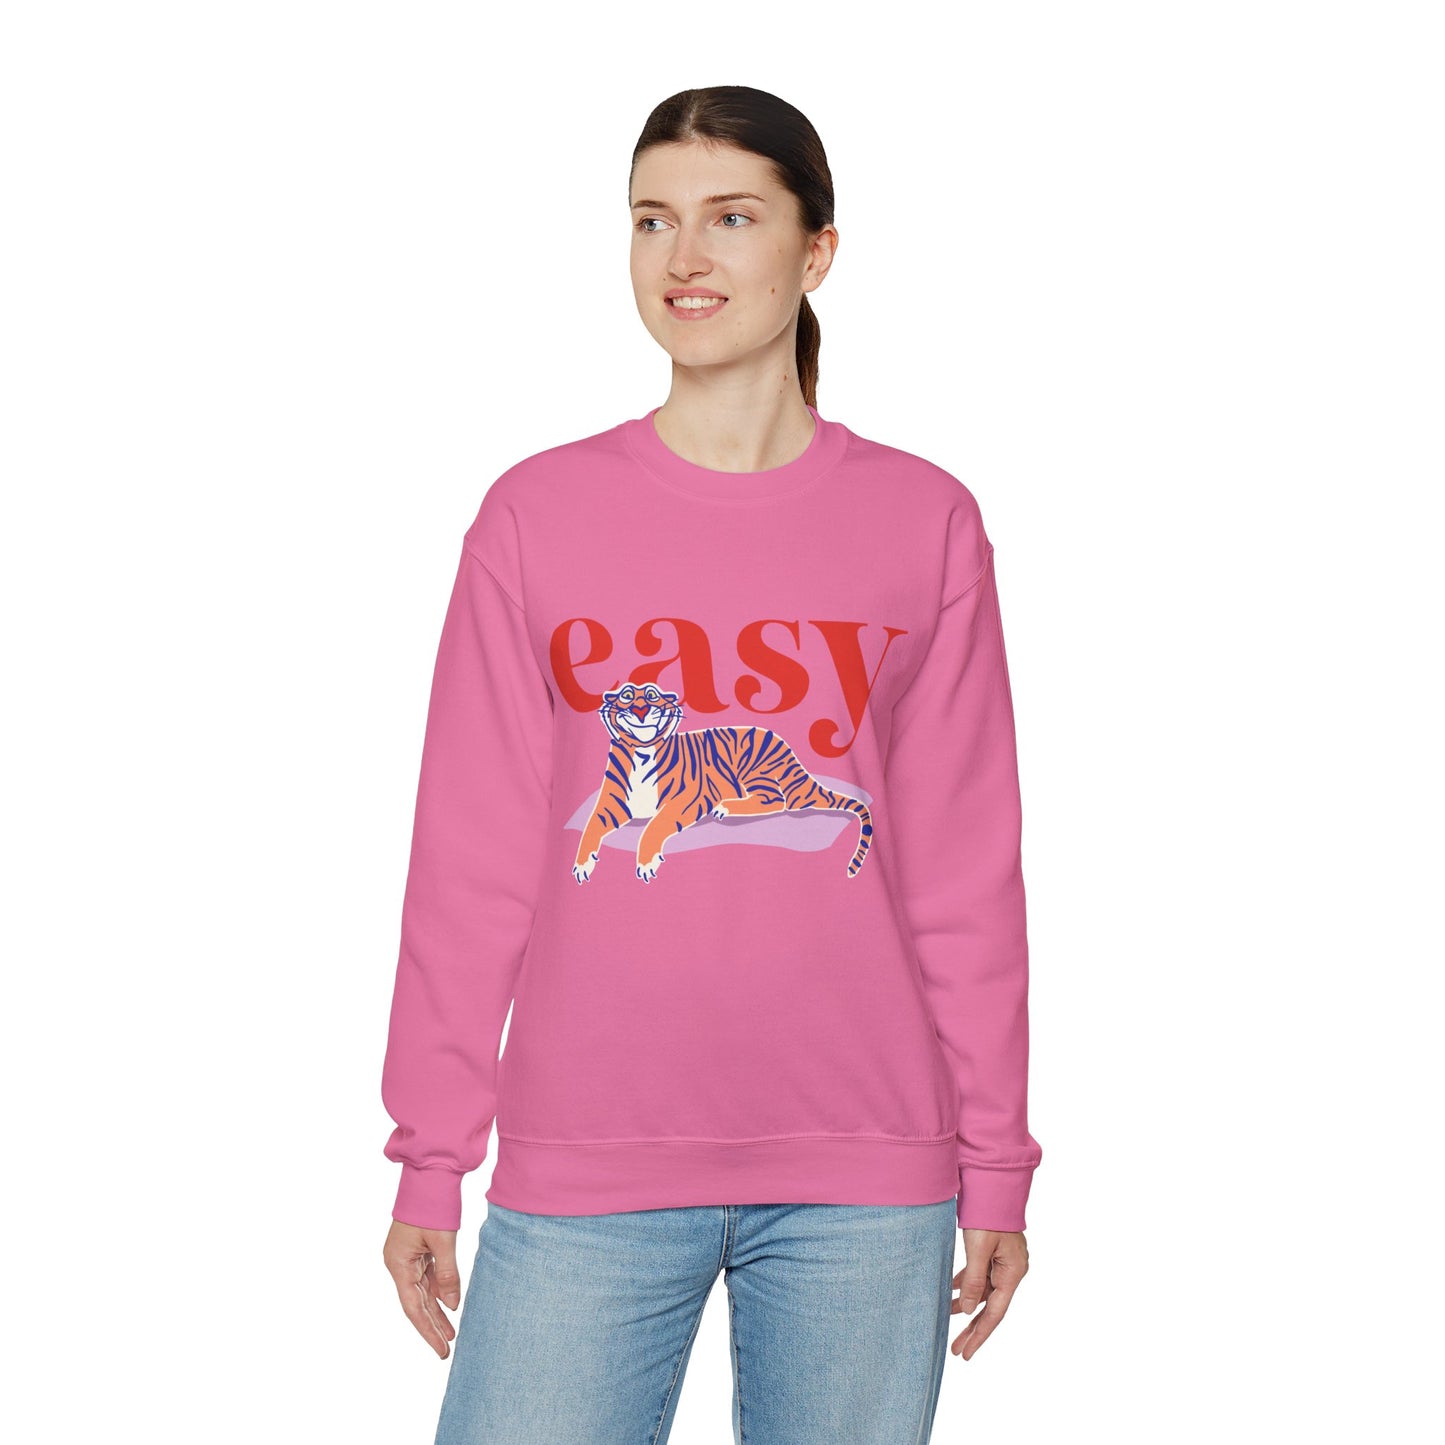 Easy Tiger - Rajah- Adult Crewneck Sweatshirt